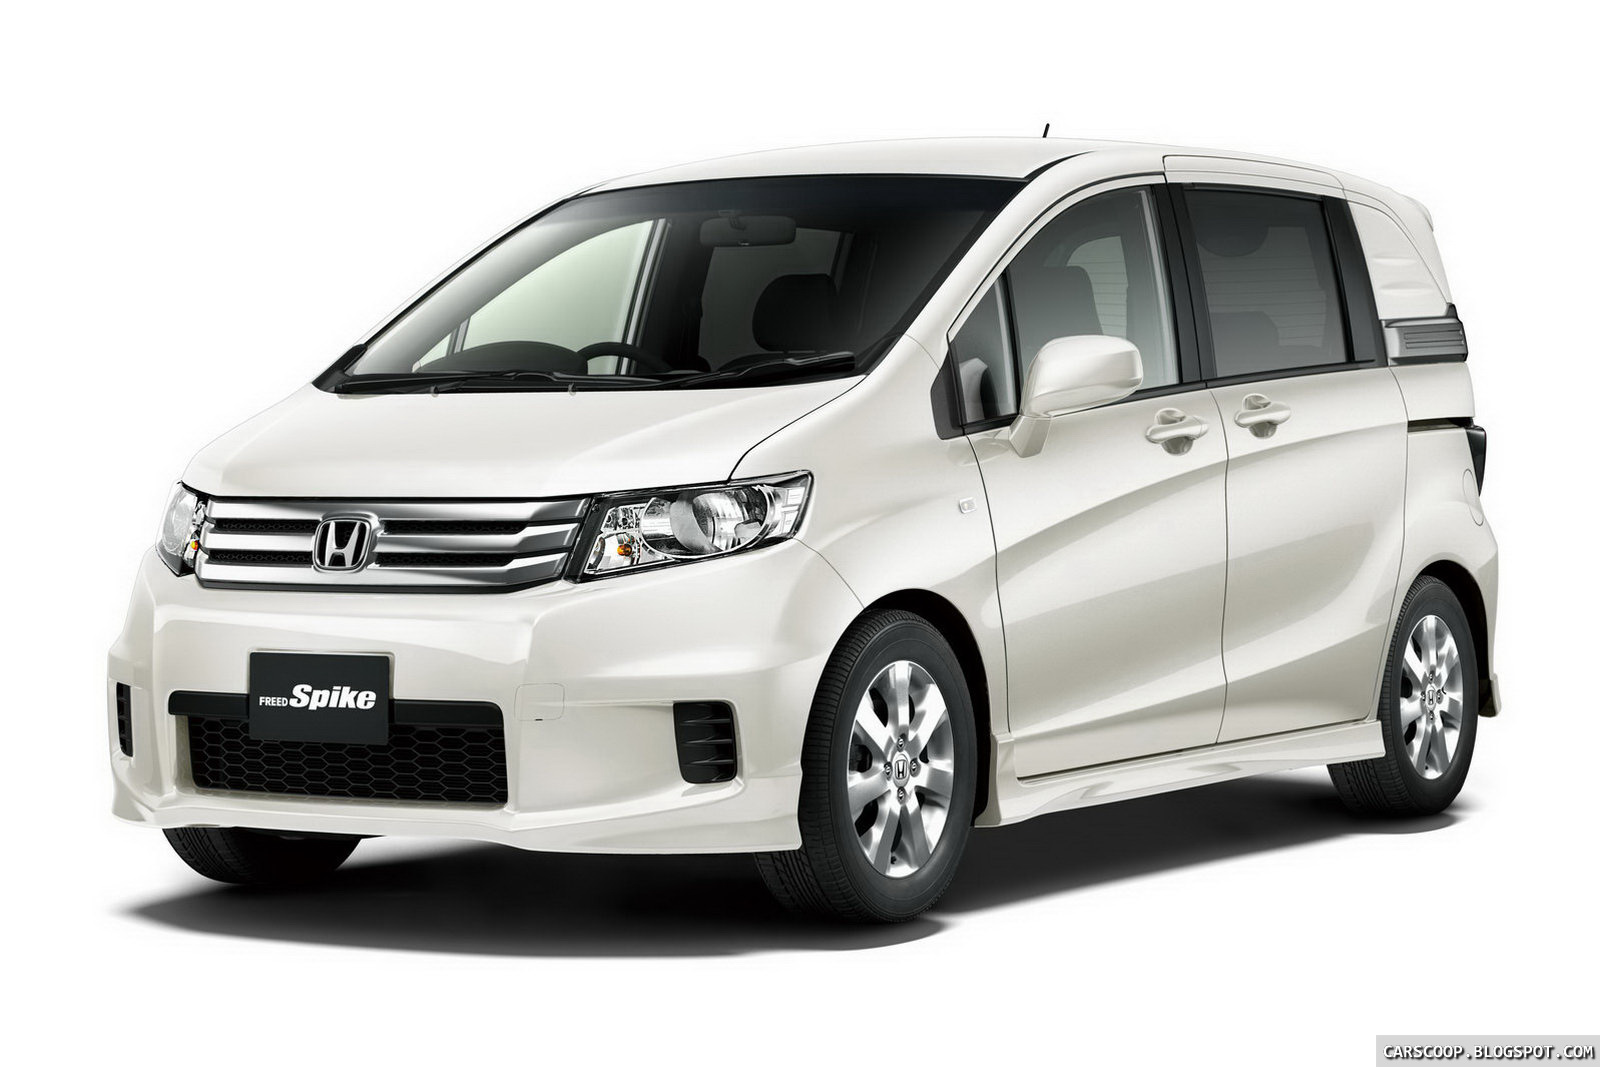 New Honda  Freed  Spike Lifestyle Minivan Debuts in Japan 